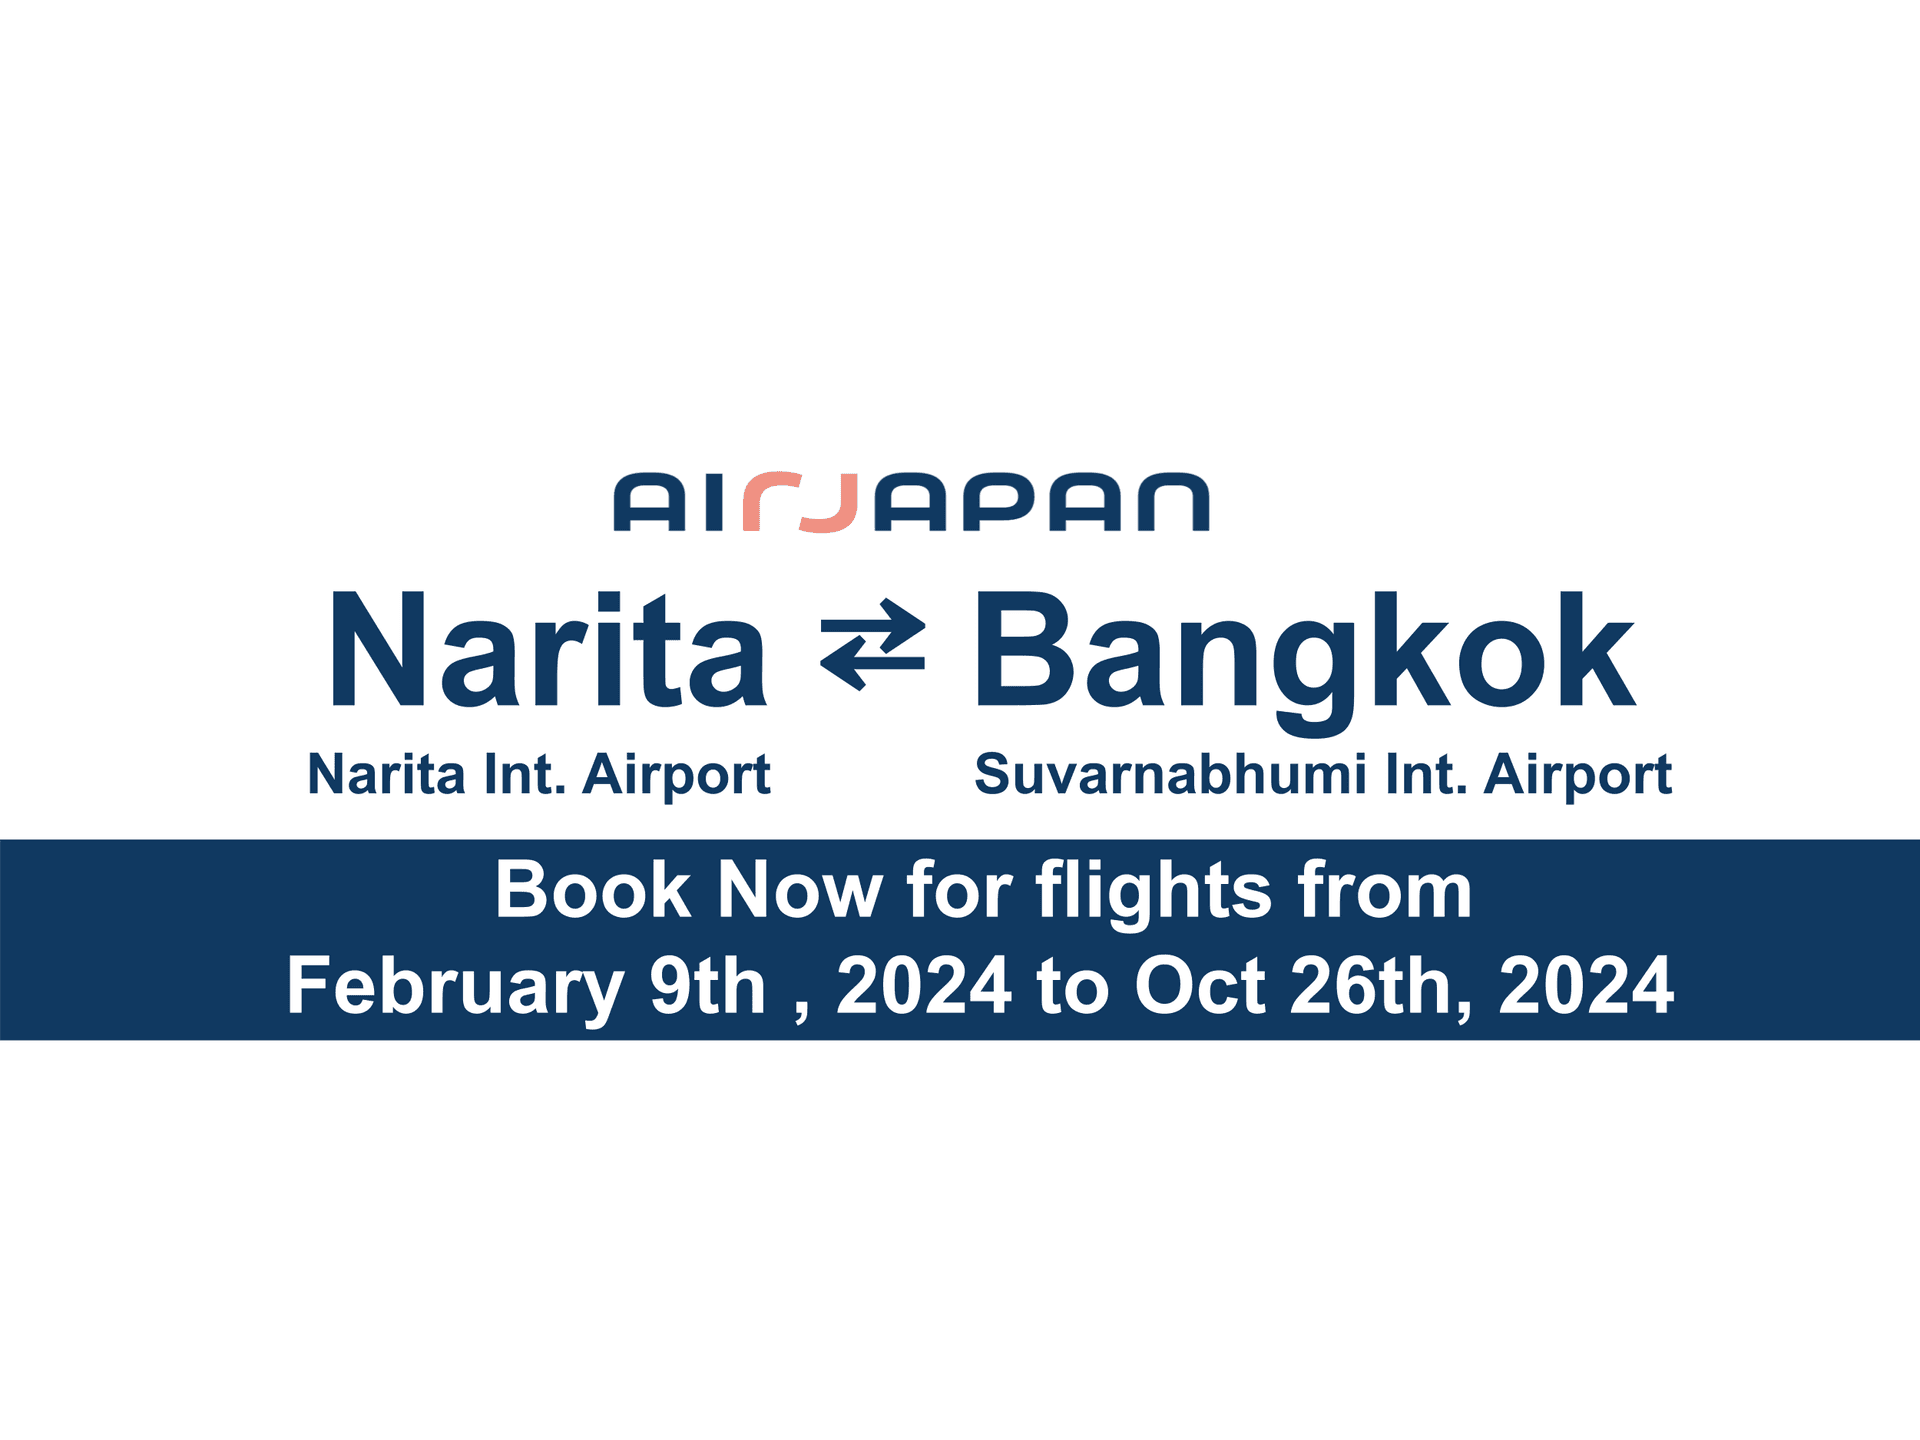 The 2024 summer schedule between Narita ⇔ Bangkok is now on sale.